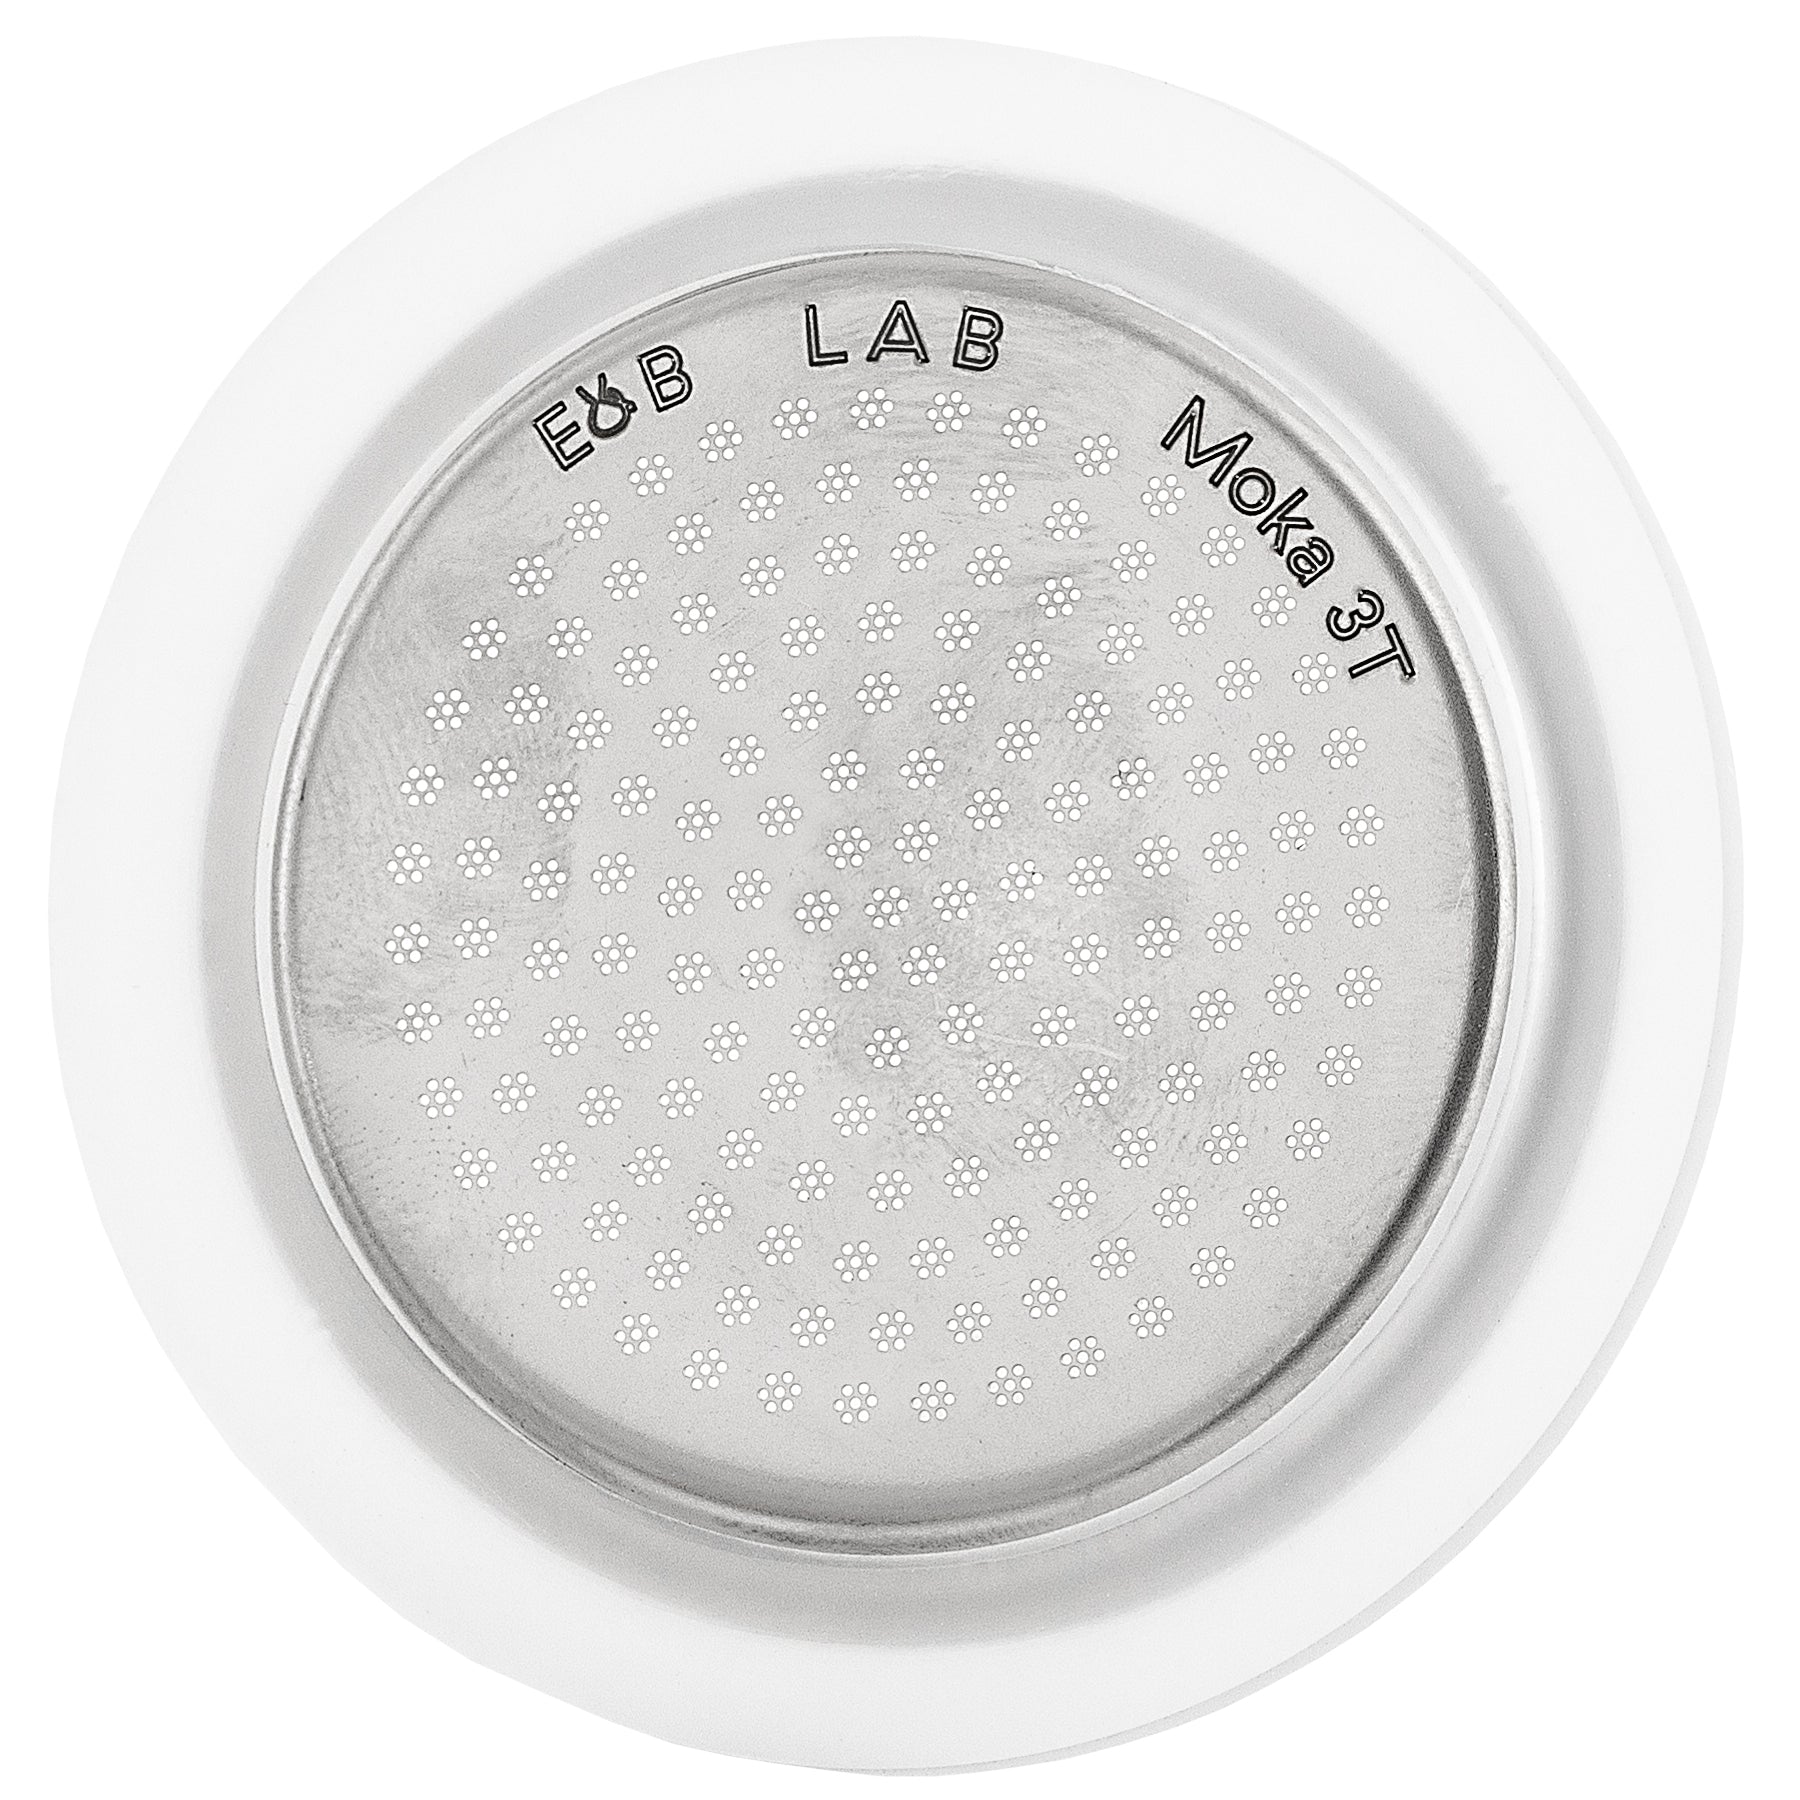 E&B Lab Competition Moka Pot Filter – Whole Latte Love